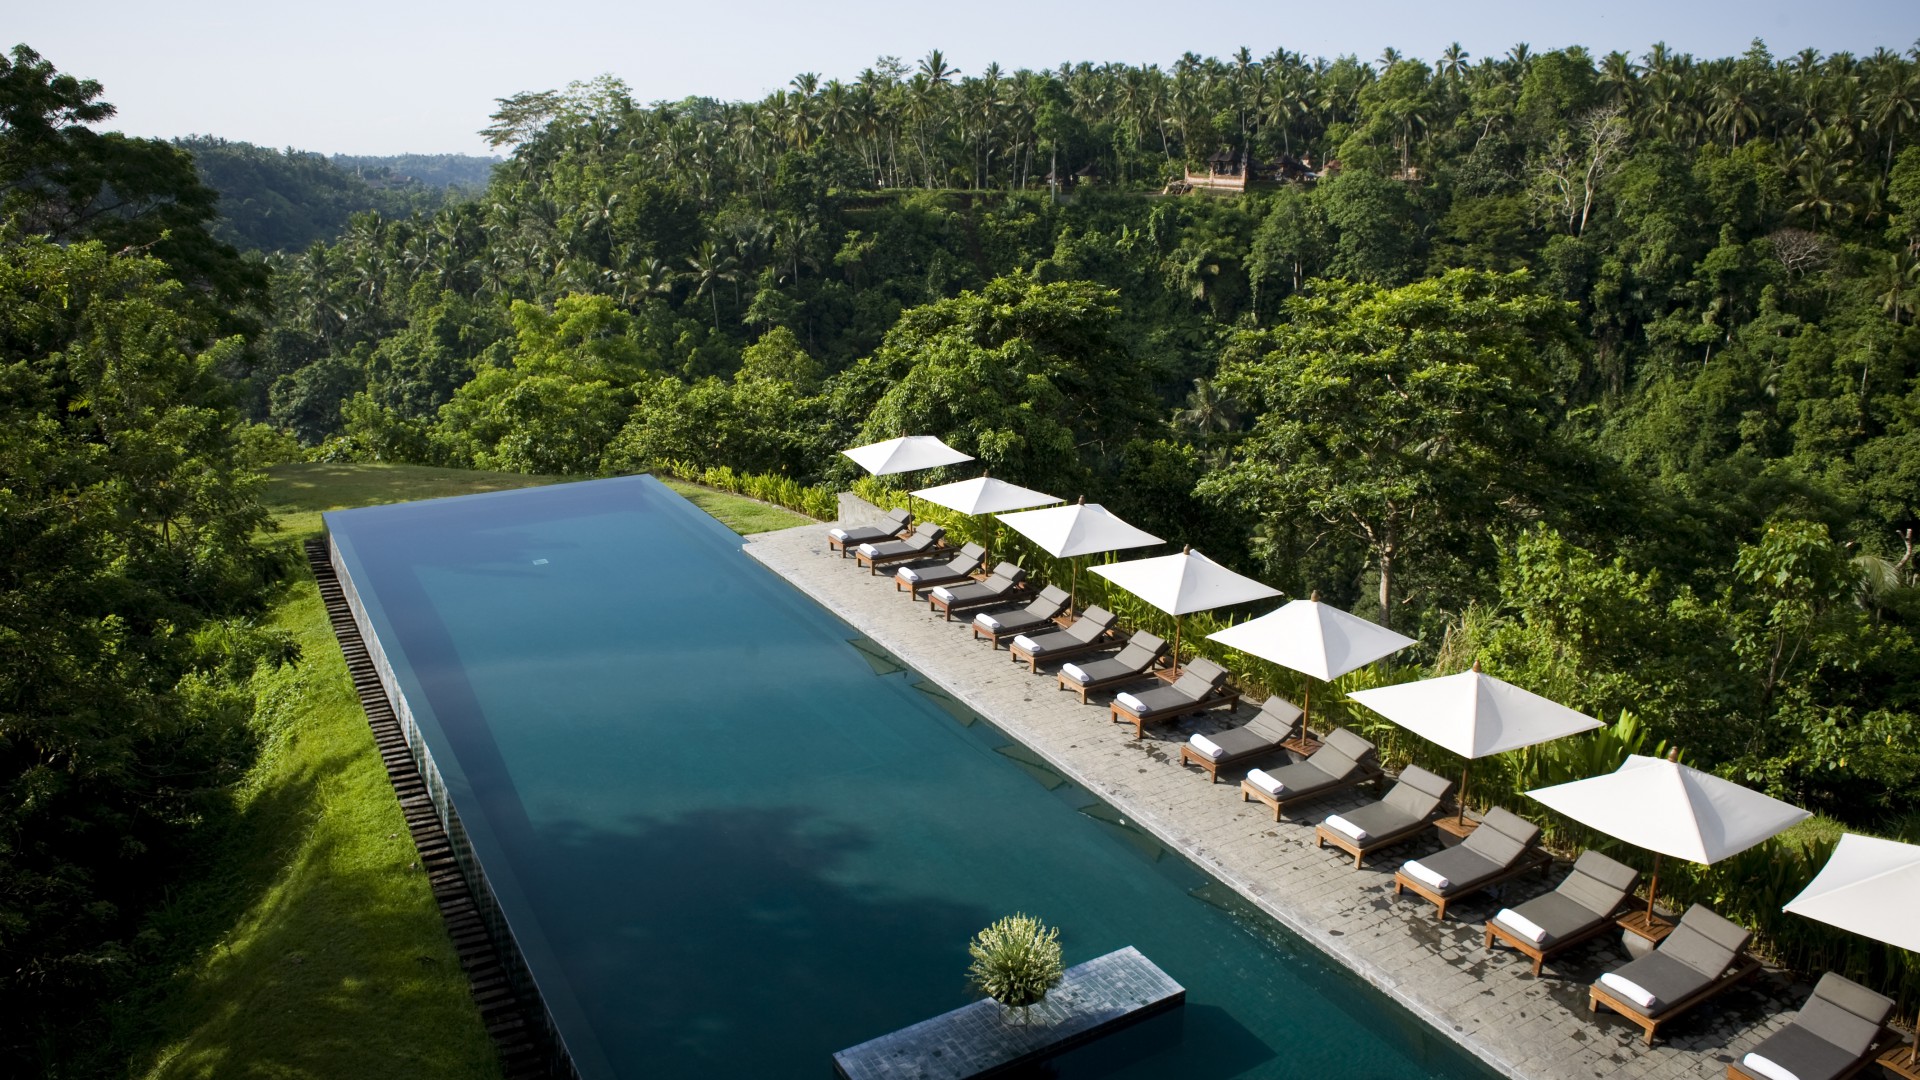 Alila Ubud, Bali, Indonesia, The best hotel pools 2017, tourism, travel, resort, vacation, pool, sunbed, forest (horizontal)